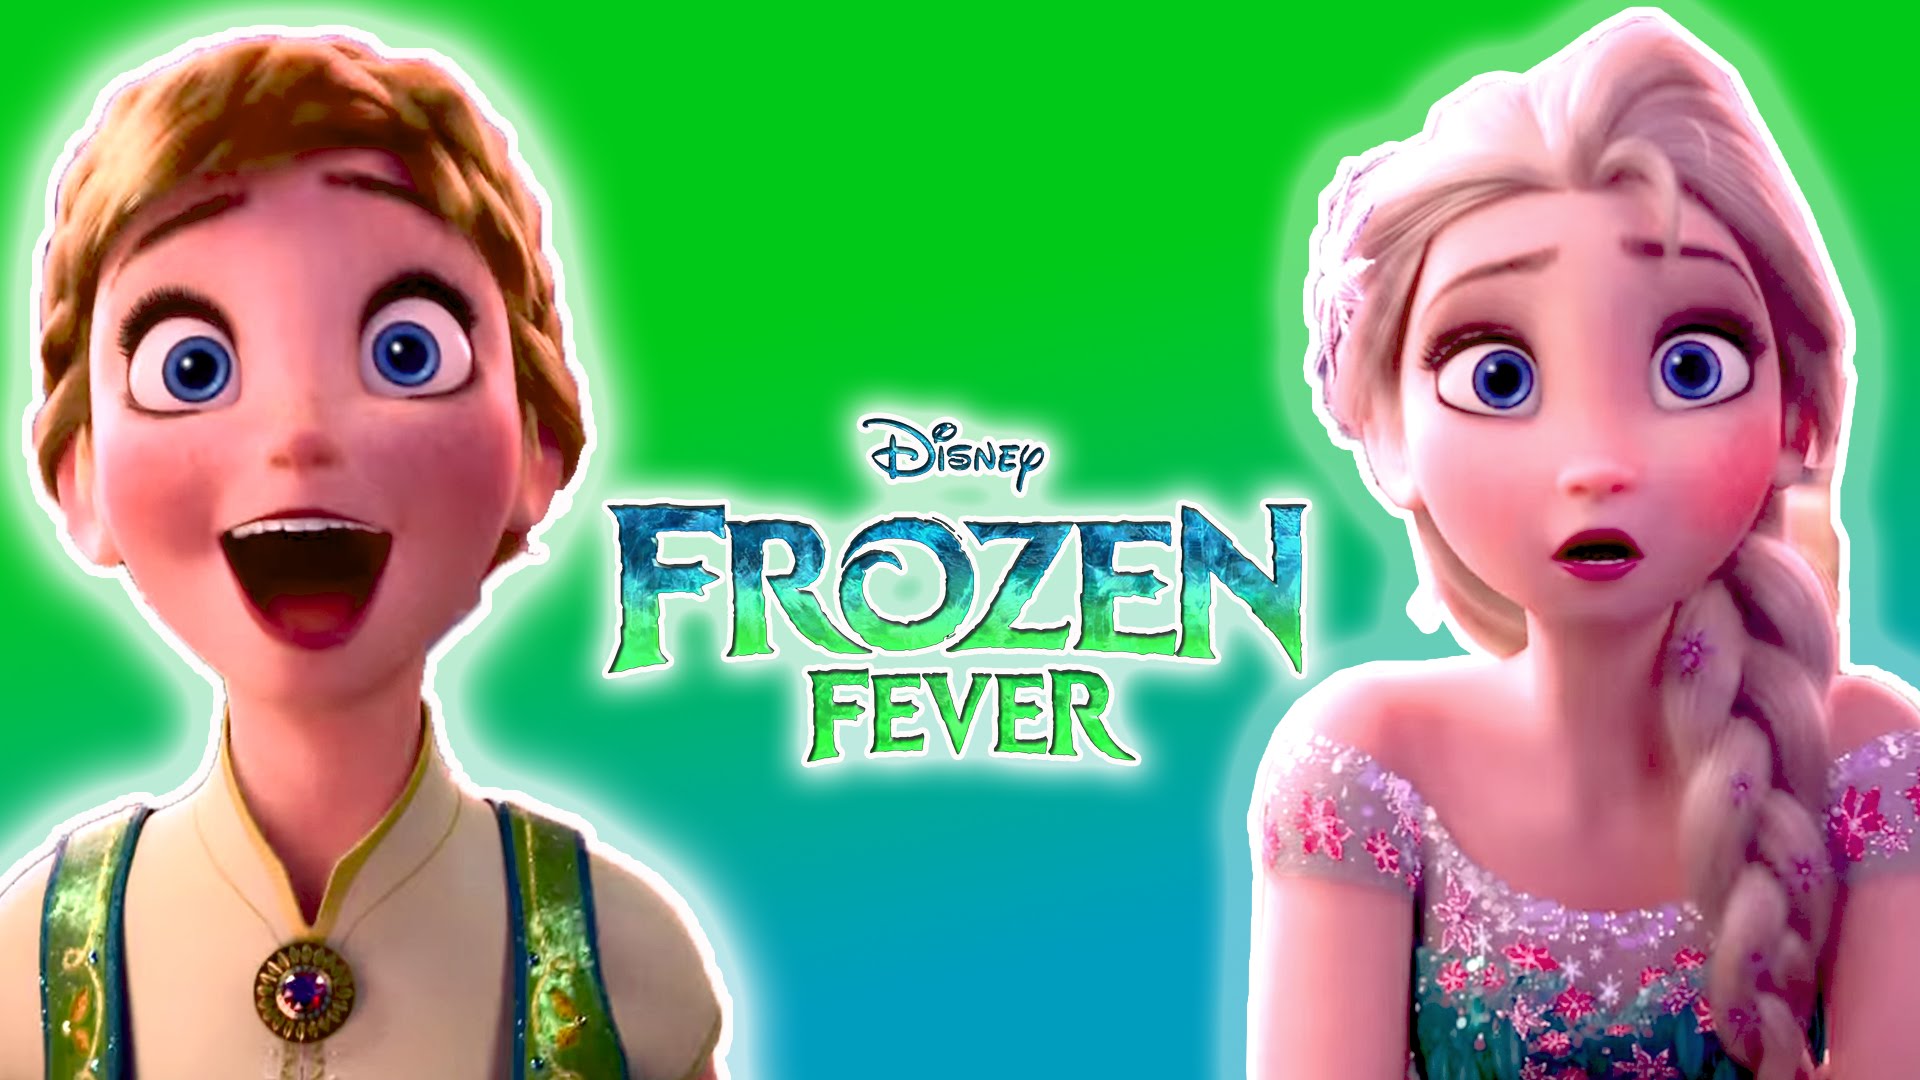 Movie Frozen Fever HD Wallpaper Background Image.